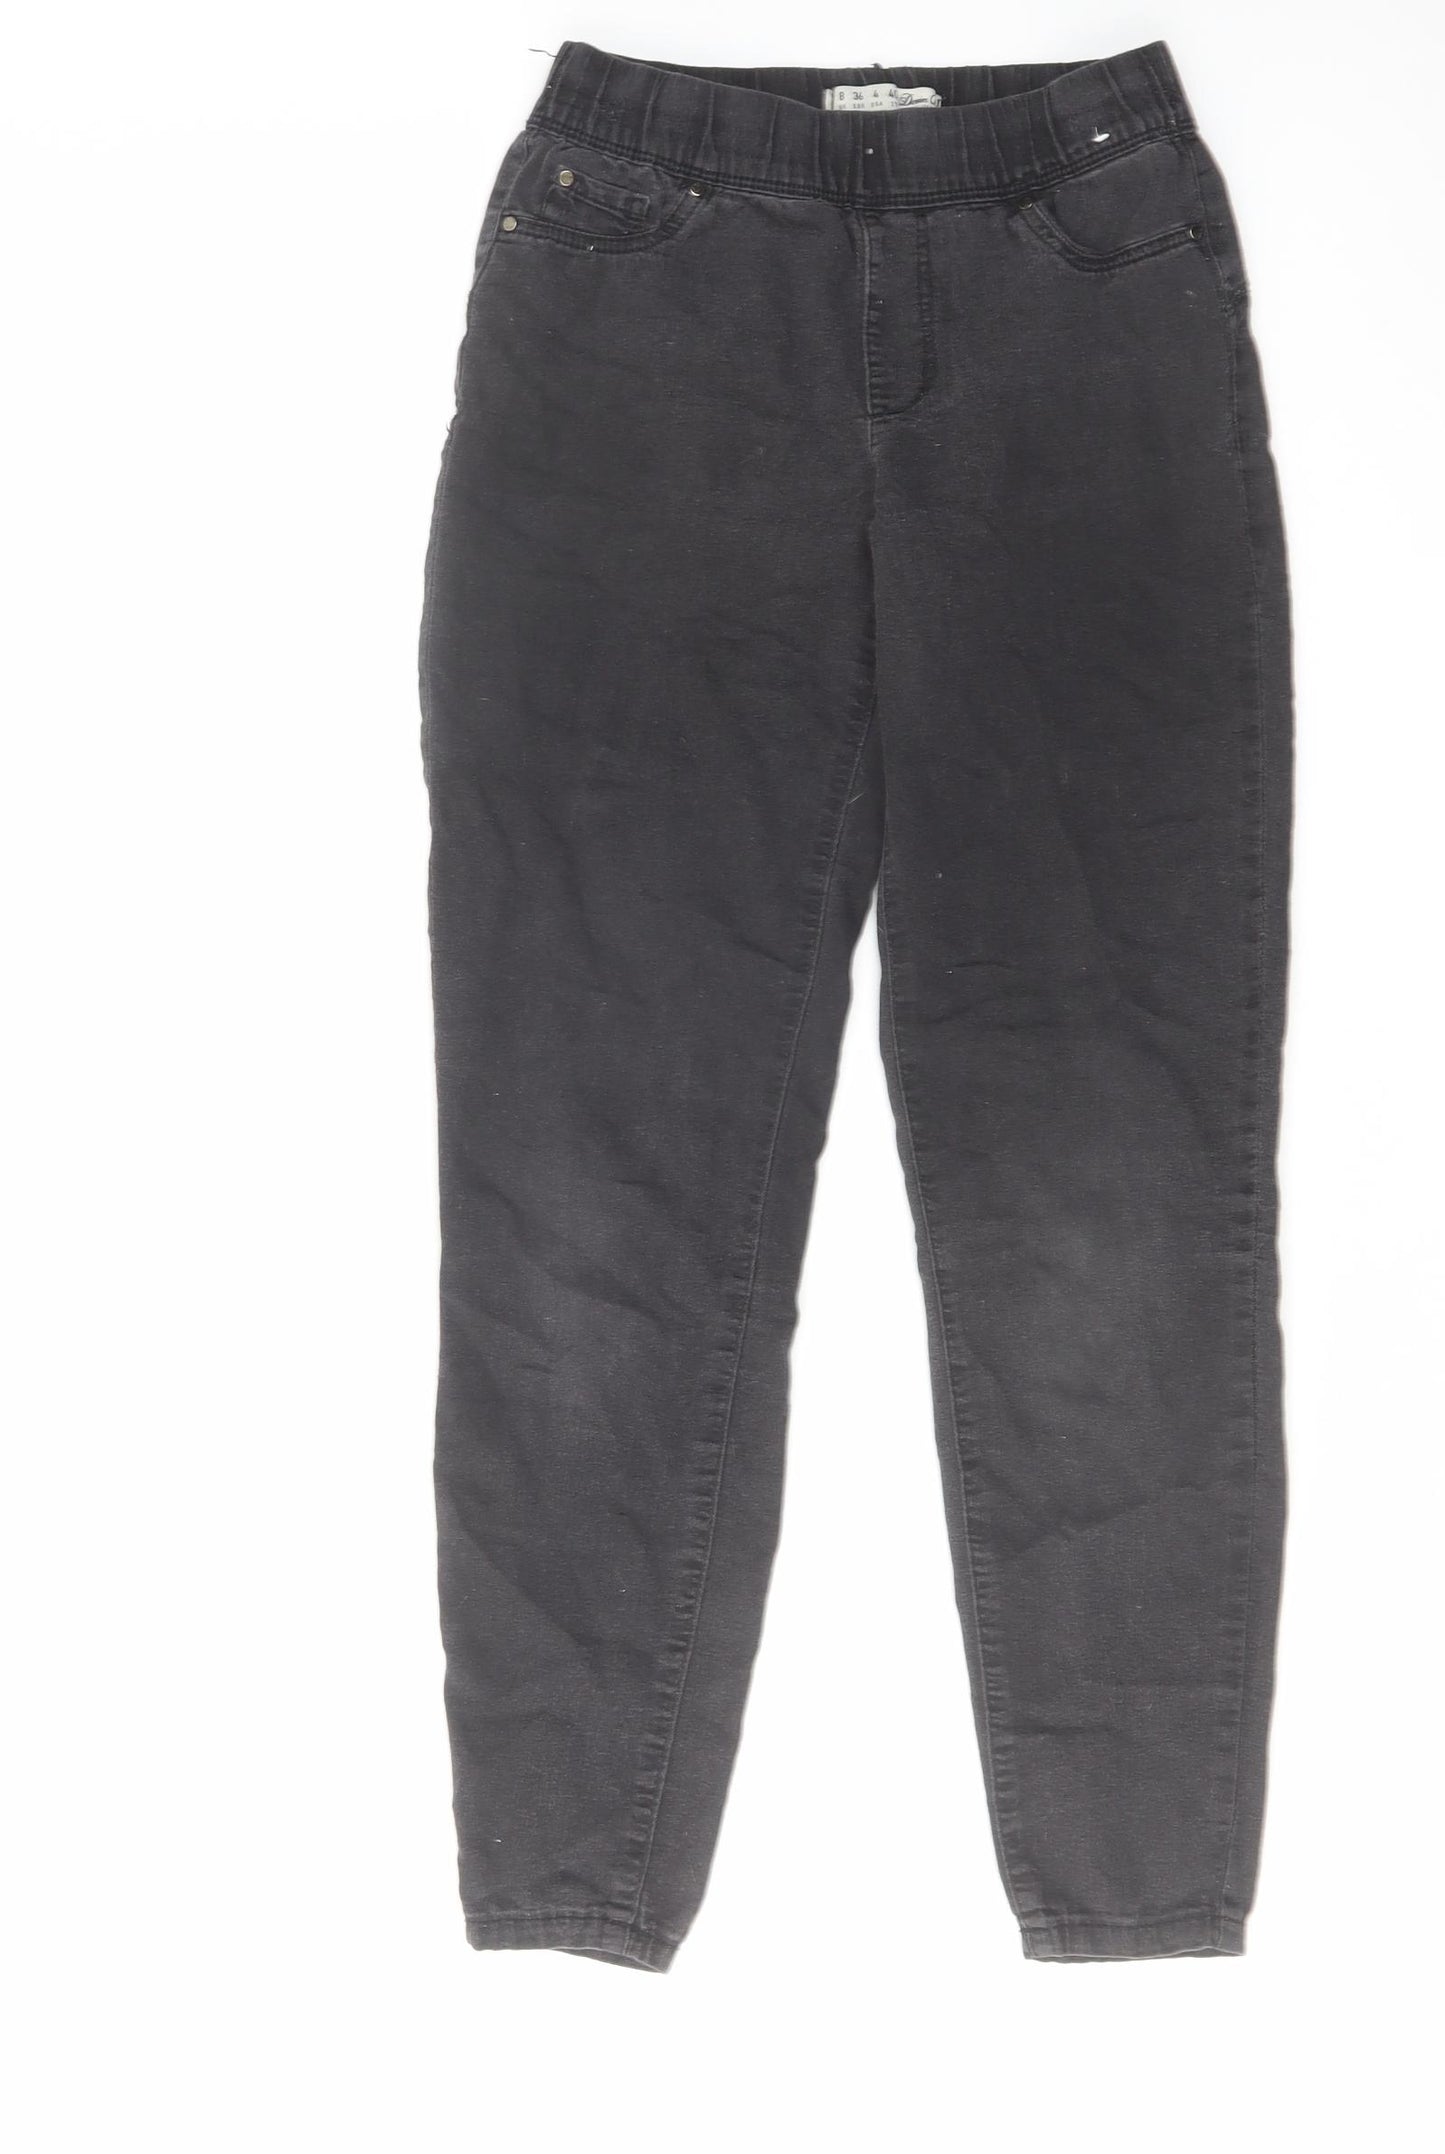 Denim & Co. Womens Grey Cotton Skinny Jeans Size 8 L26 in Regular